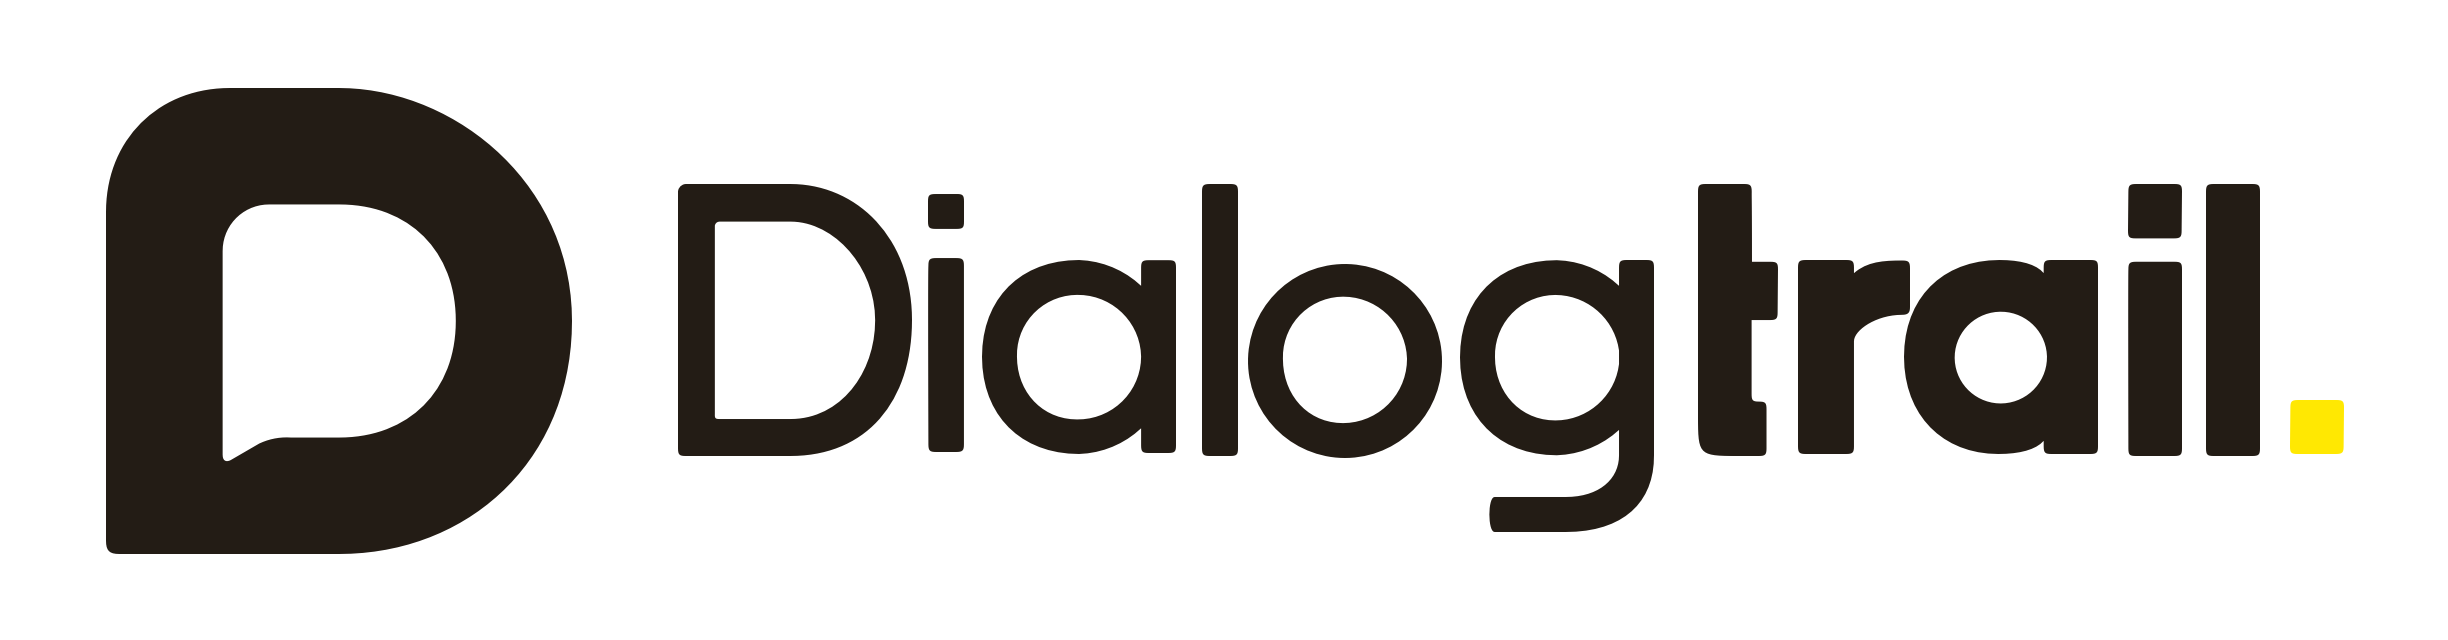 Dialogtril logo chalmers ventures